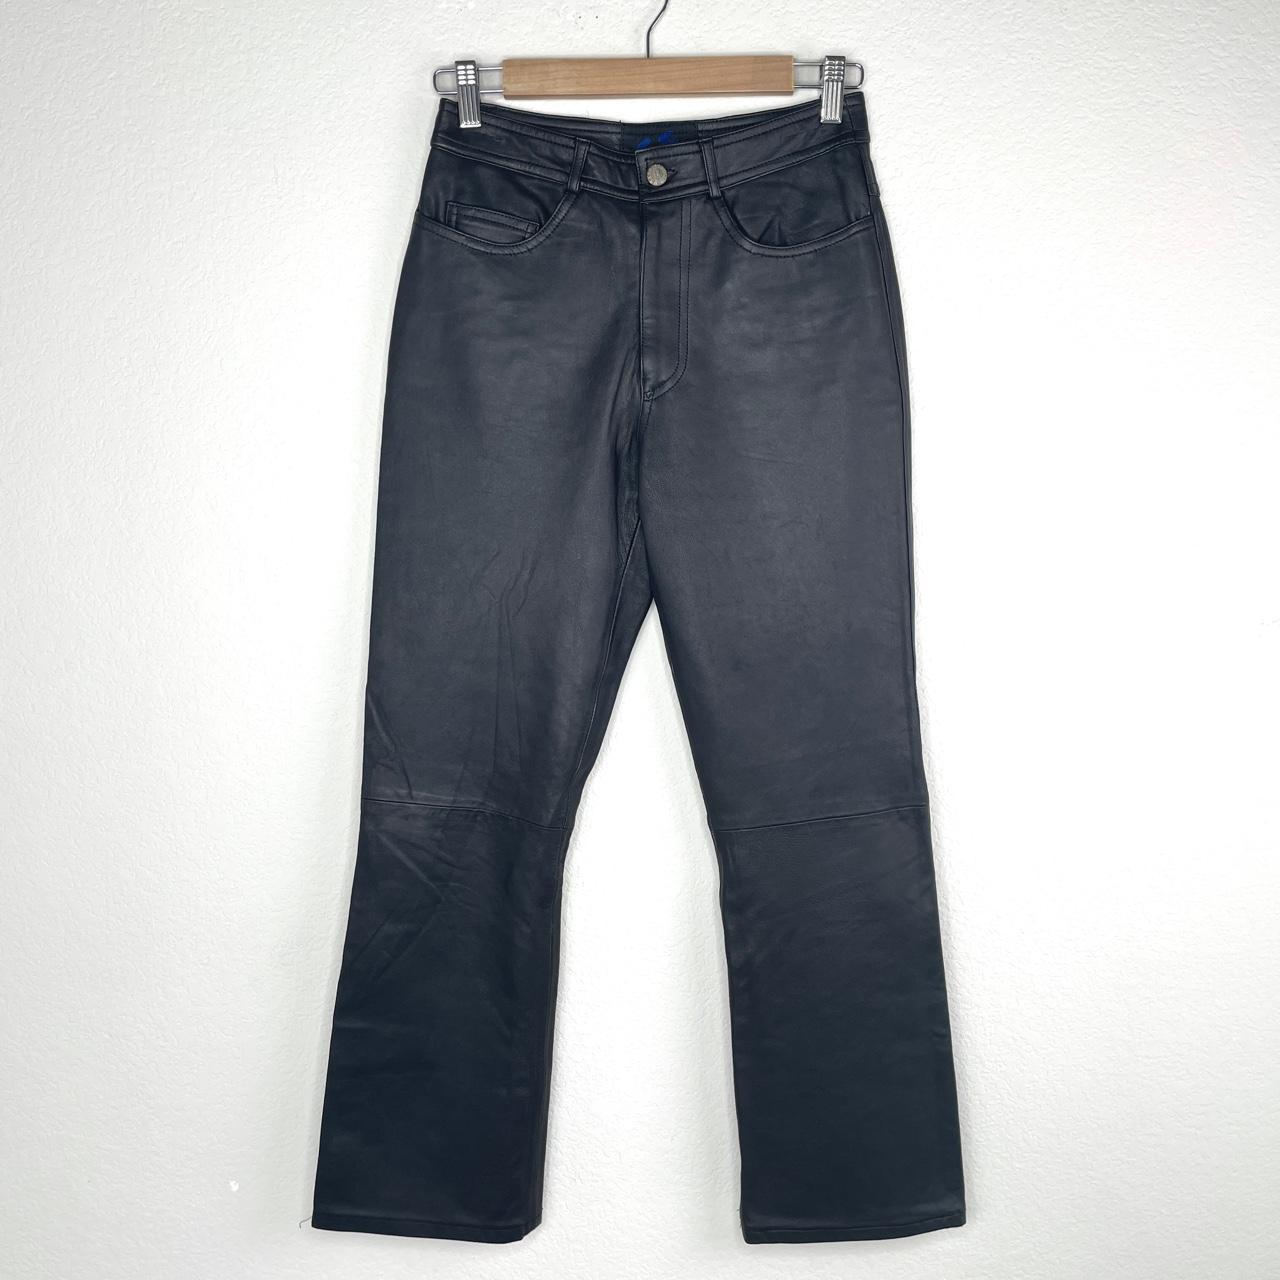 Product Image 2 - Vintage Black Leather Pants 

Amazing